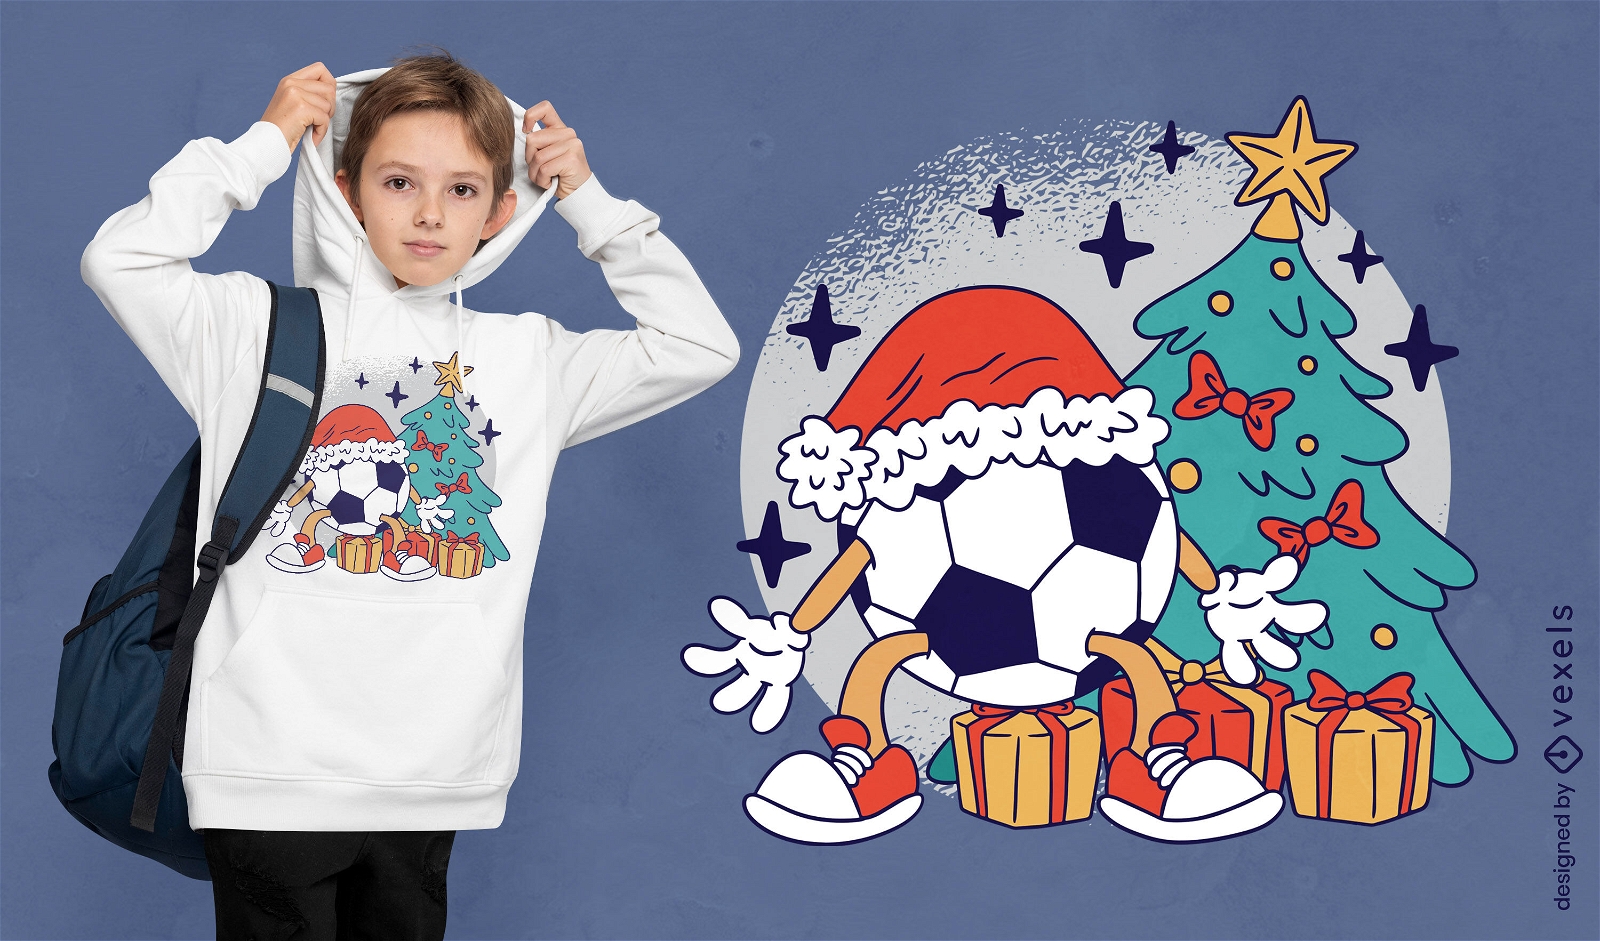 Fu?ball Weihnachts-T-Shirt-Design